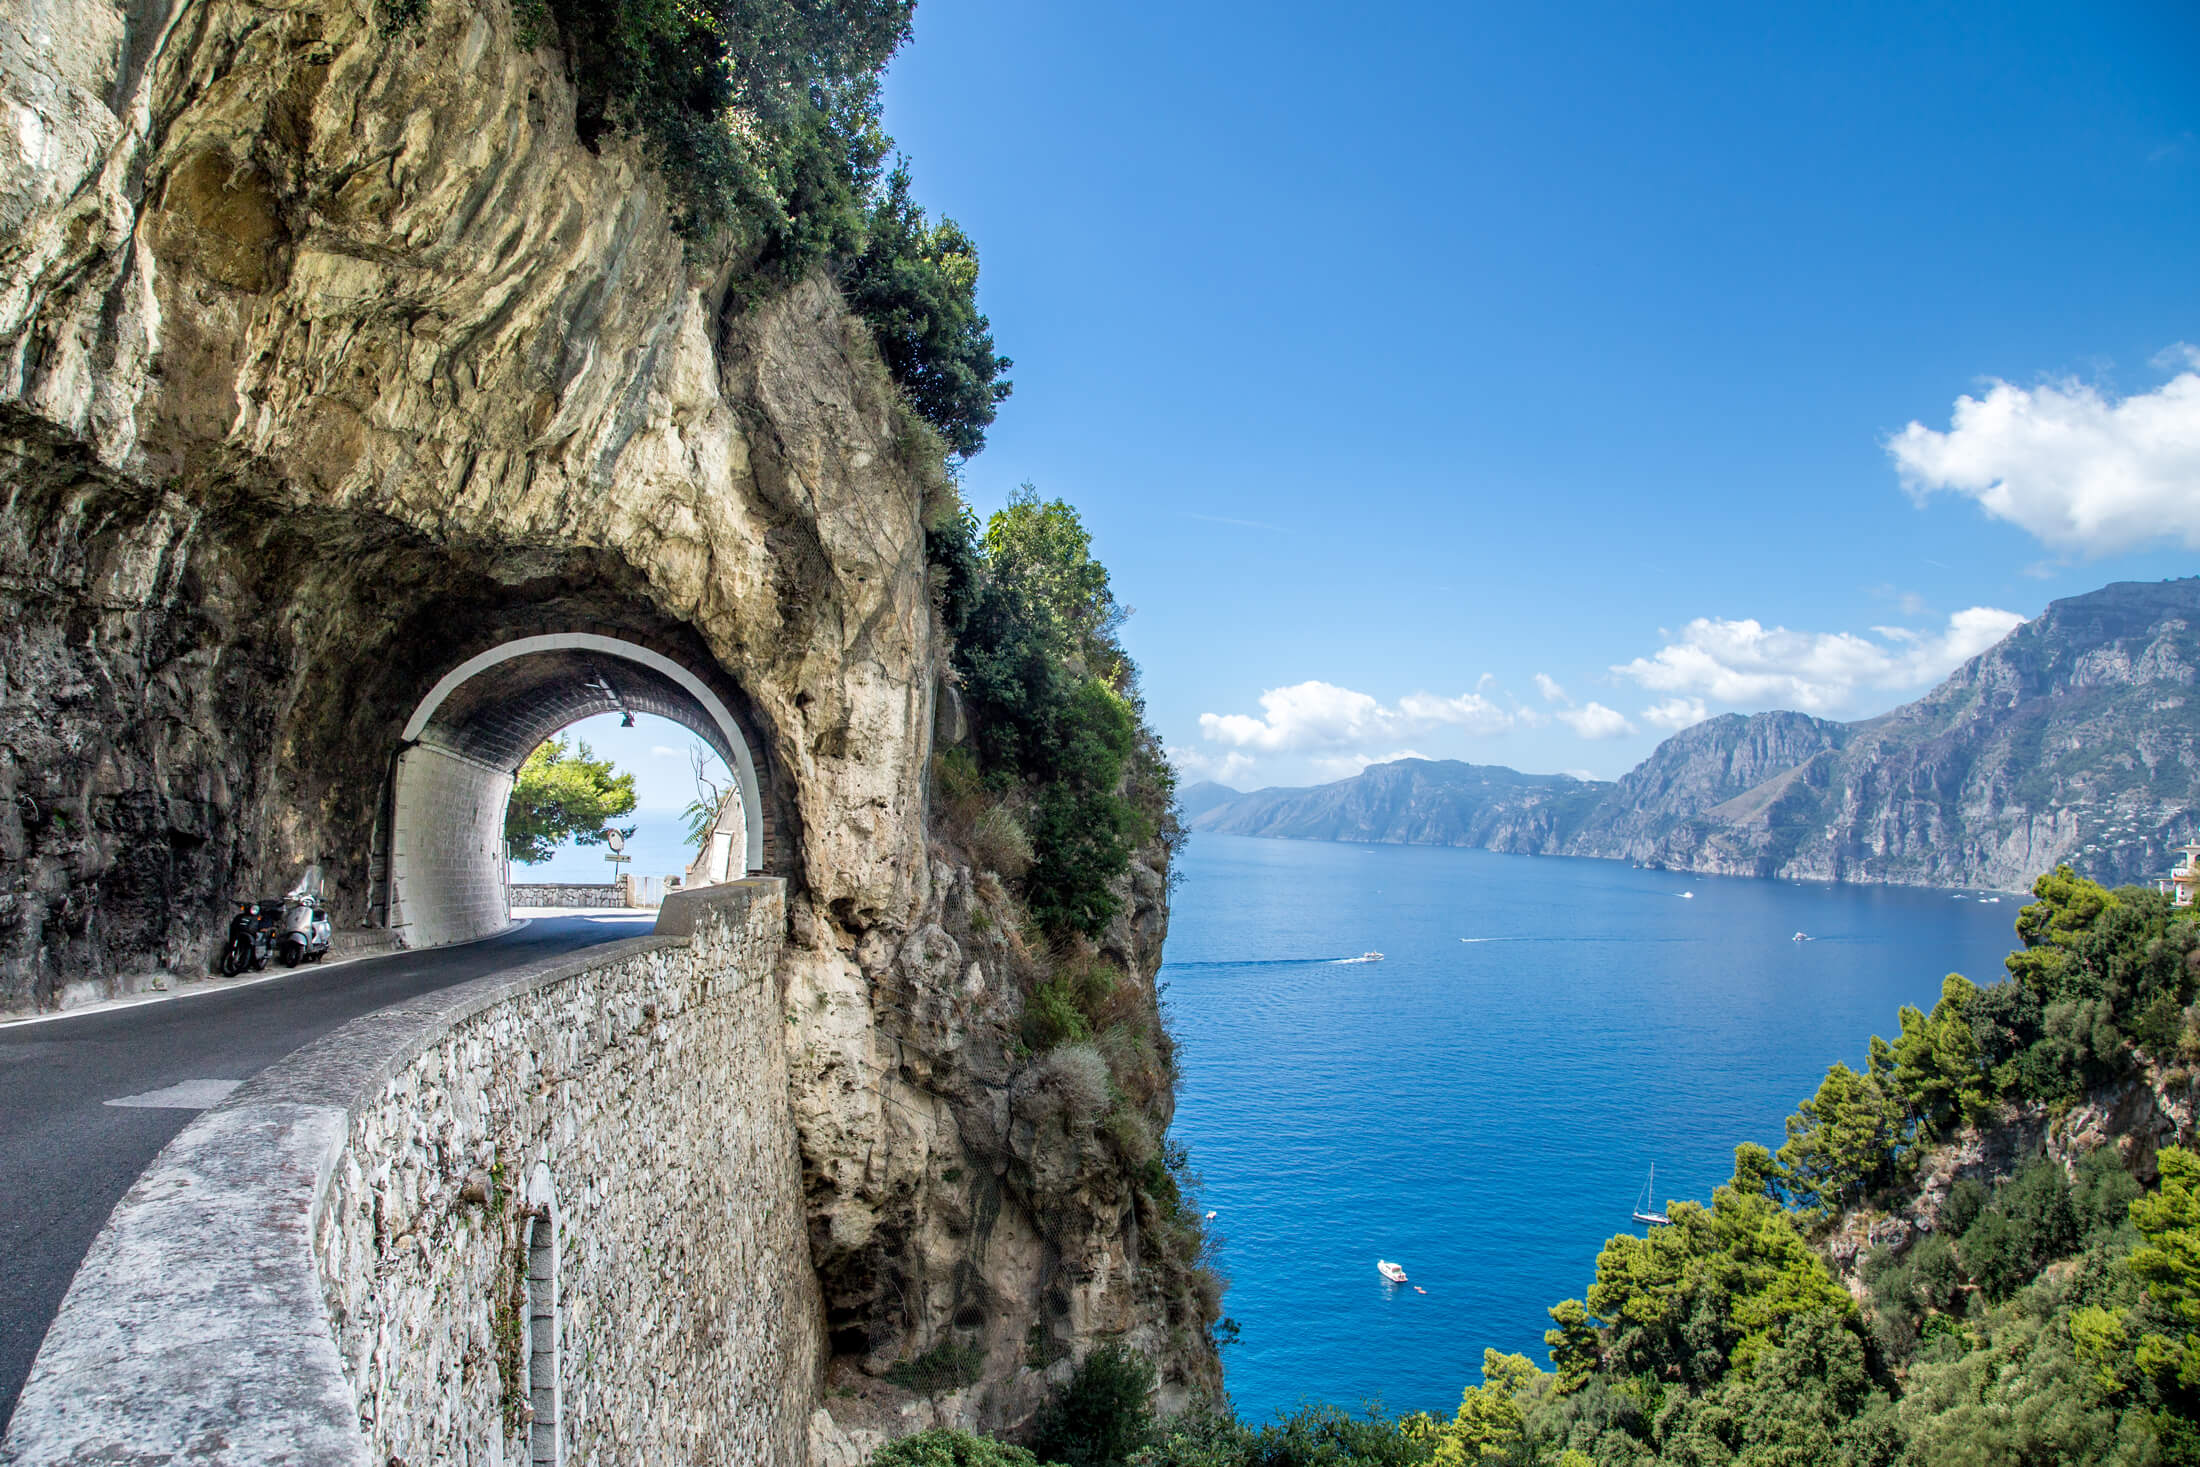 A road cut into the cliffs on Italy's Amalfi coast